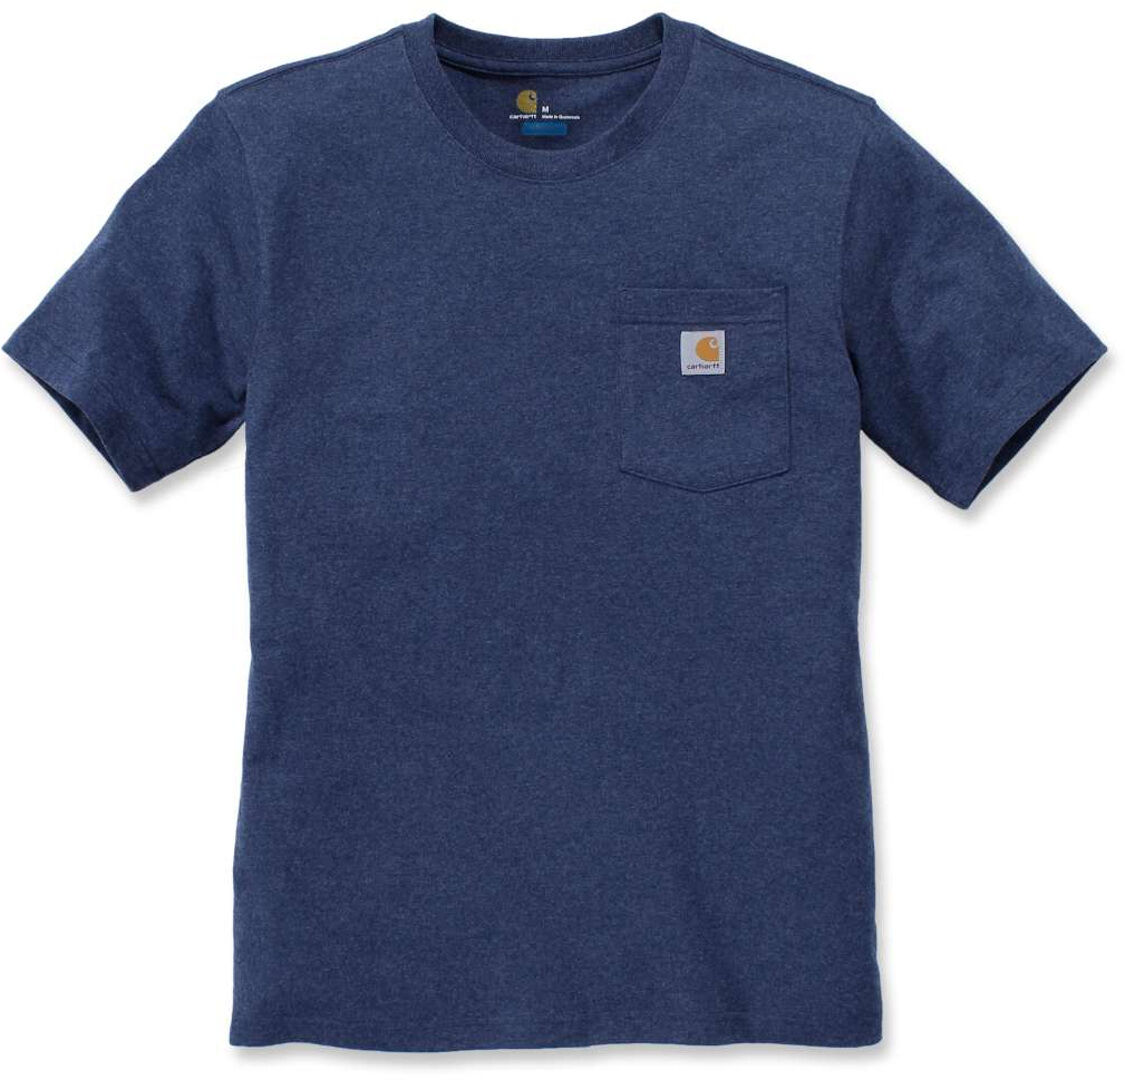 Carhartt Workwear Pocket Camiseta - Azul (L)